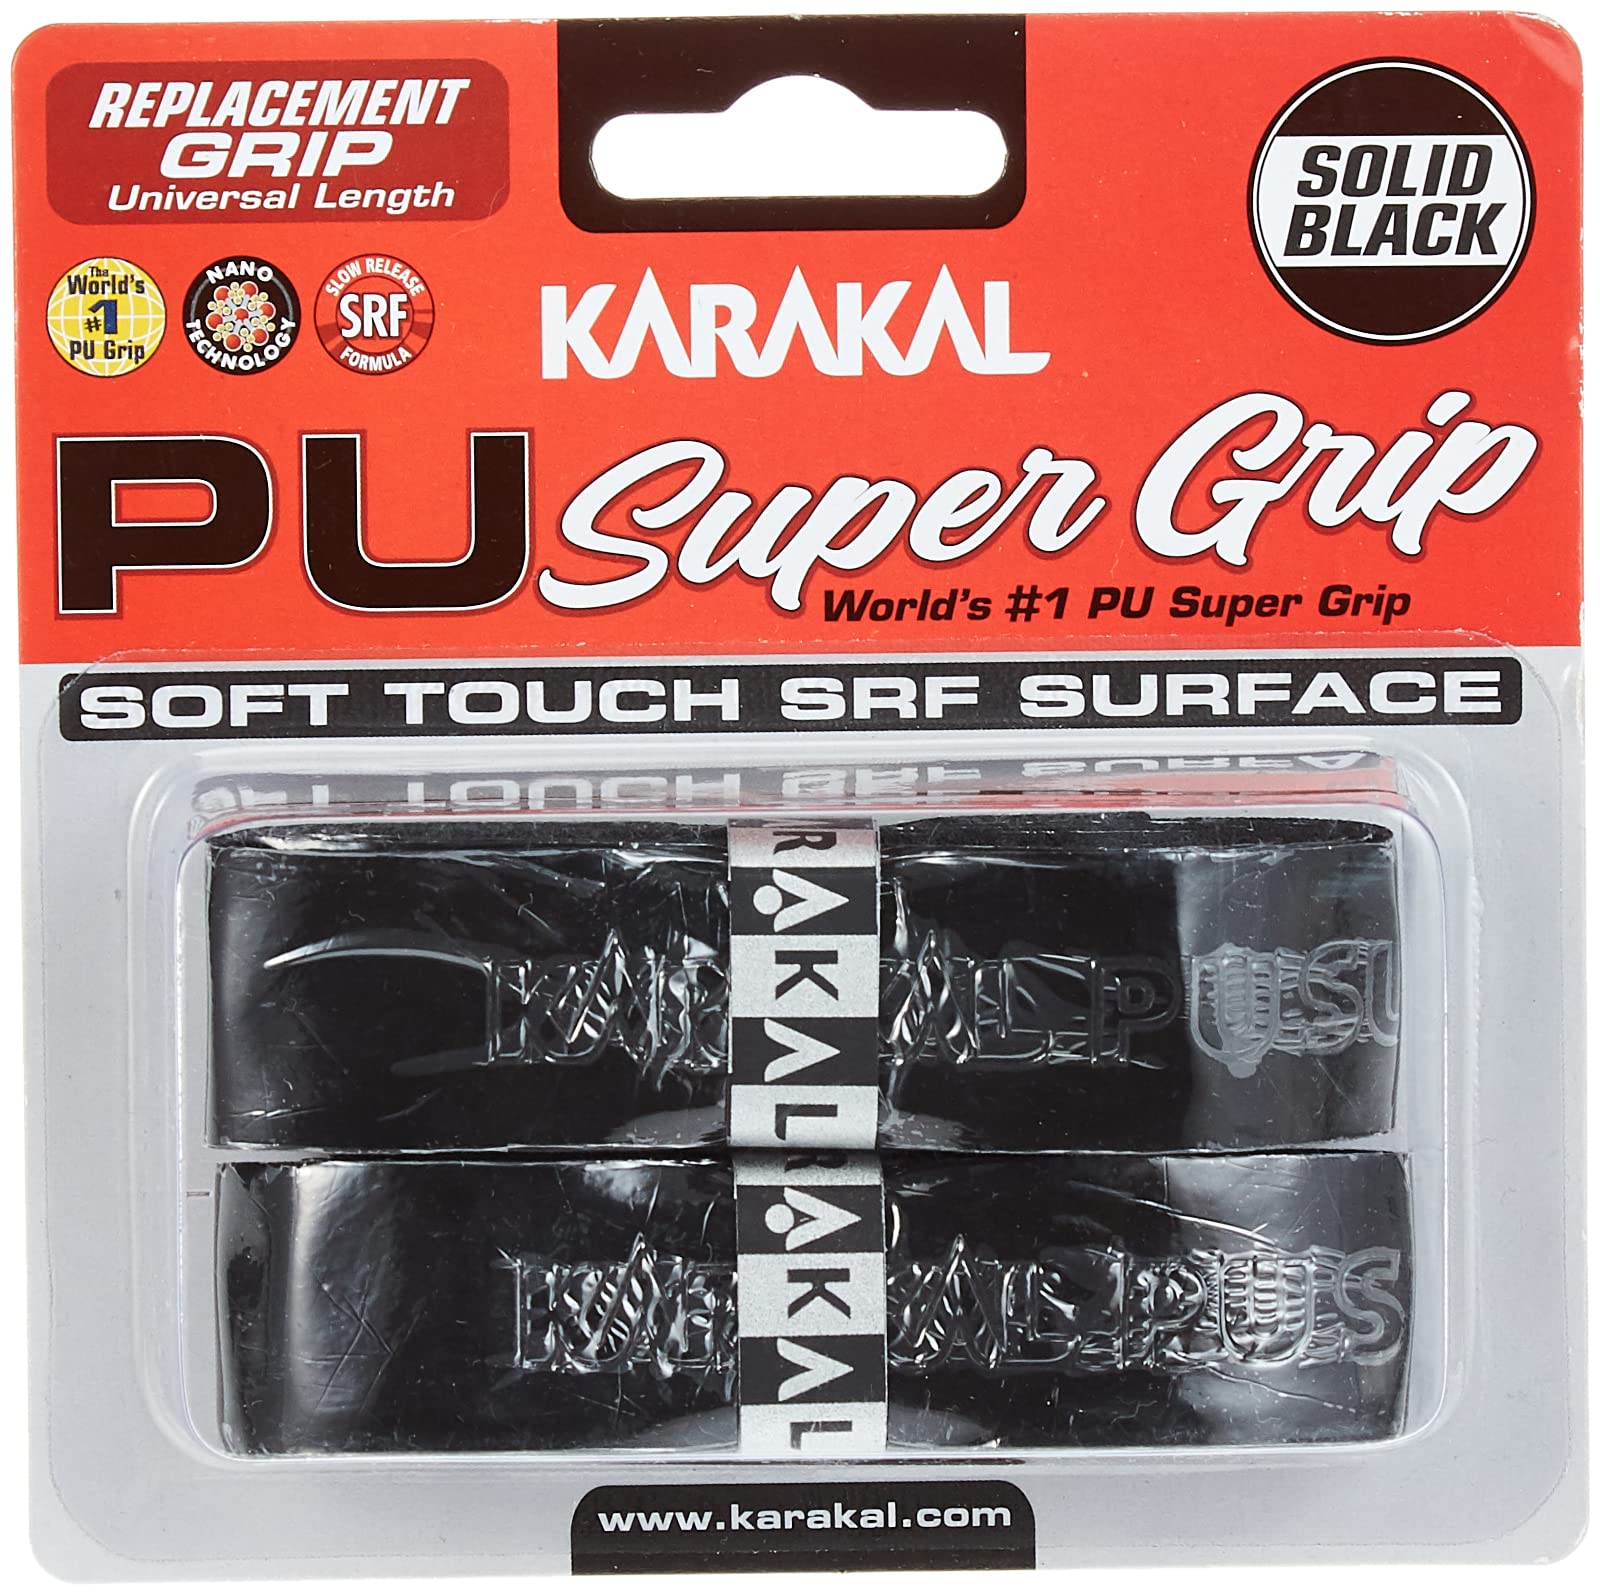 Promo Karakal PU Supergrip Lot de 2 Grips de Rechange p